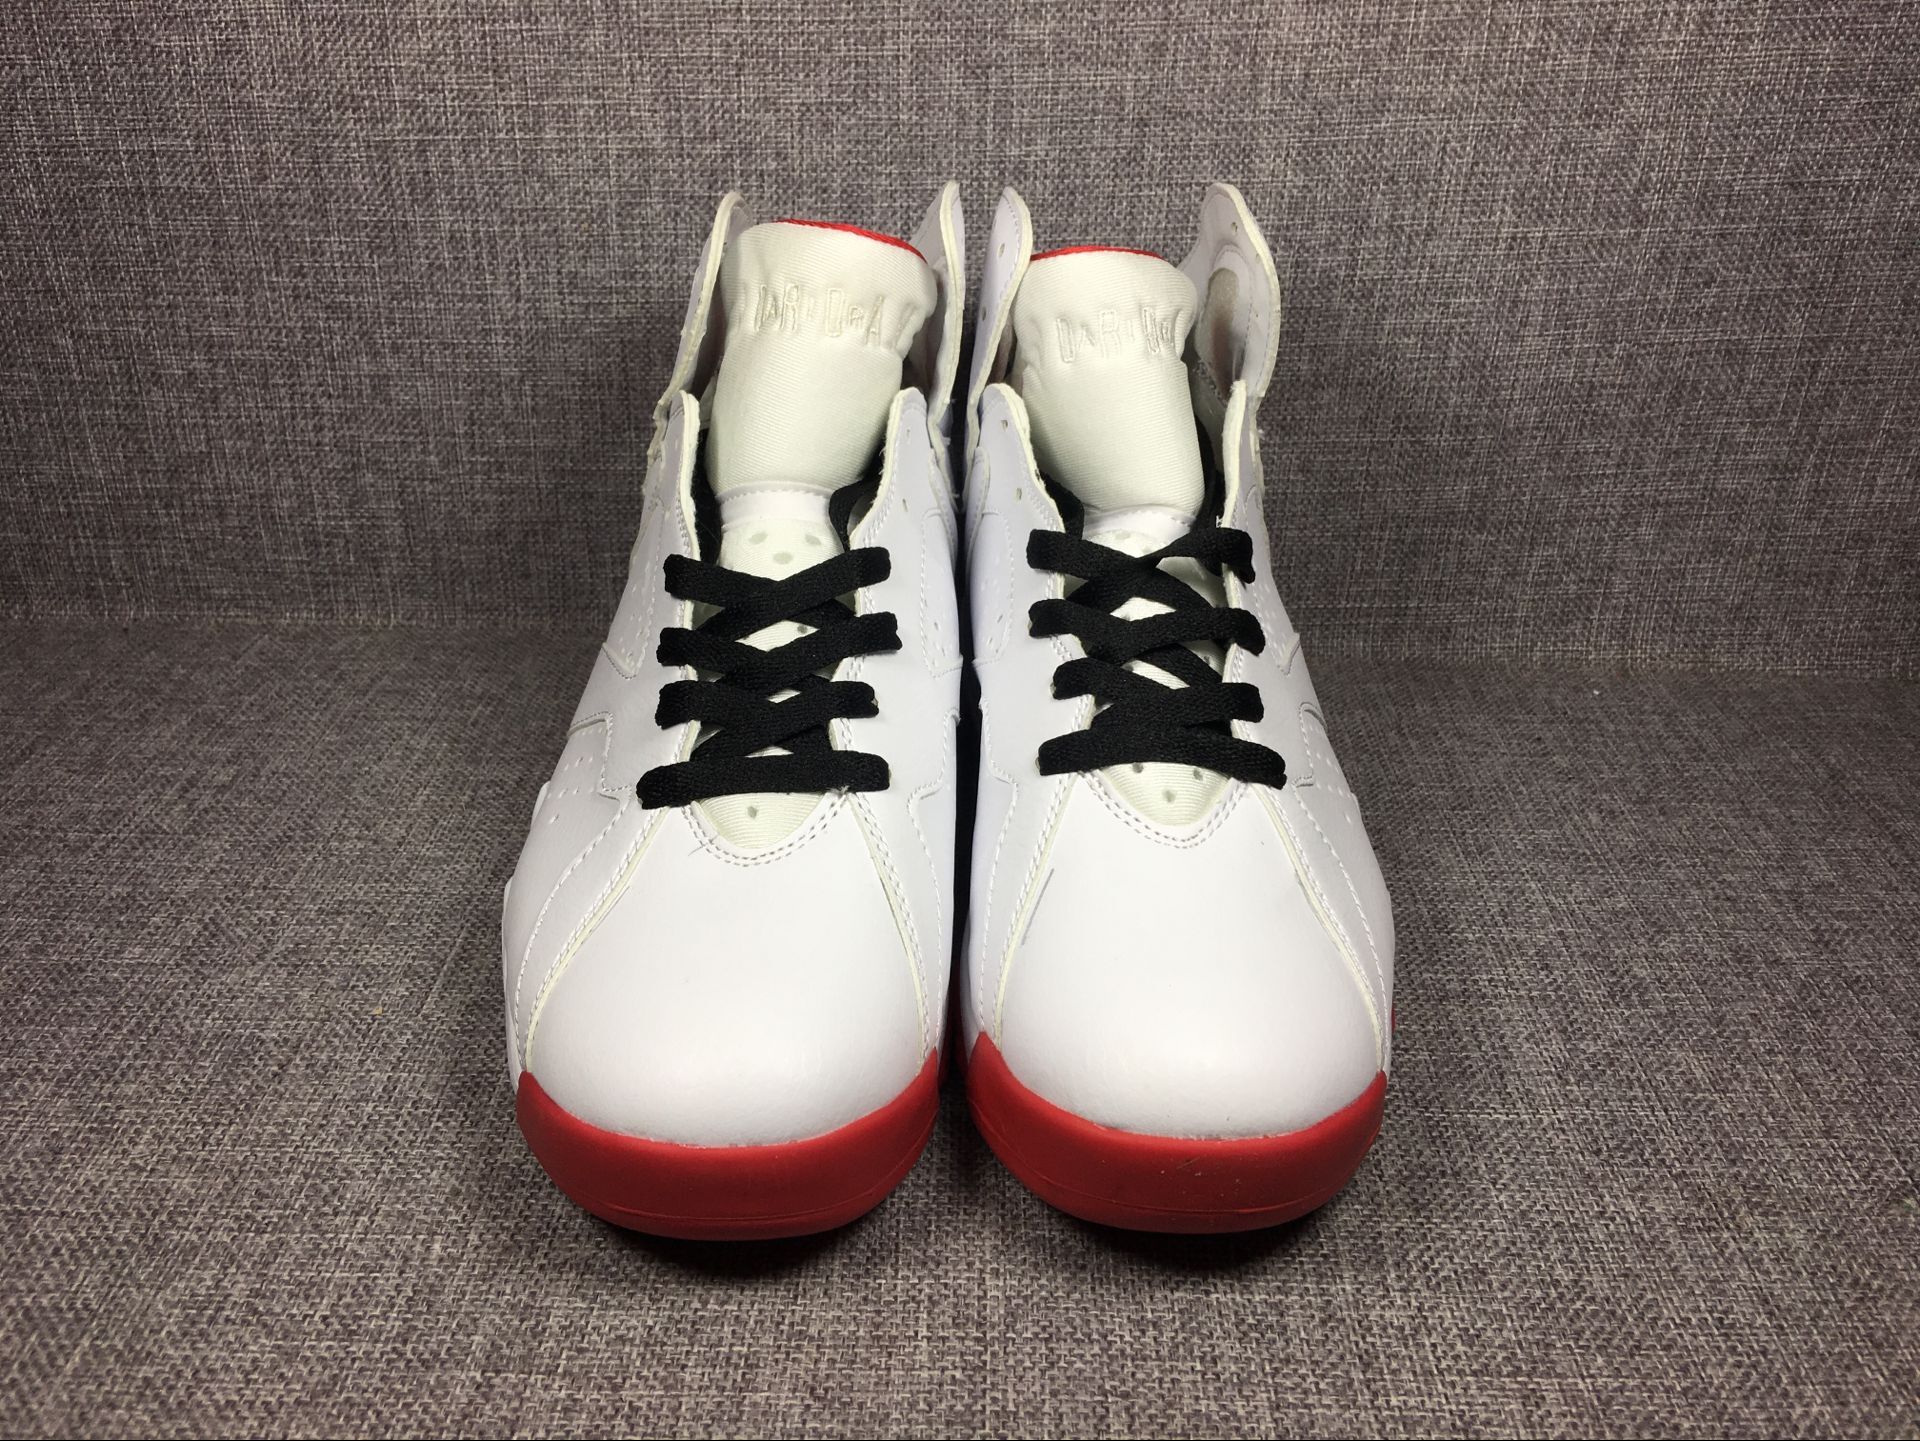 New Air Jordan 7 Retro White Red Shoes - Click Image to Close